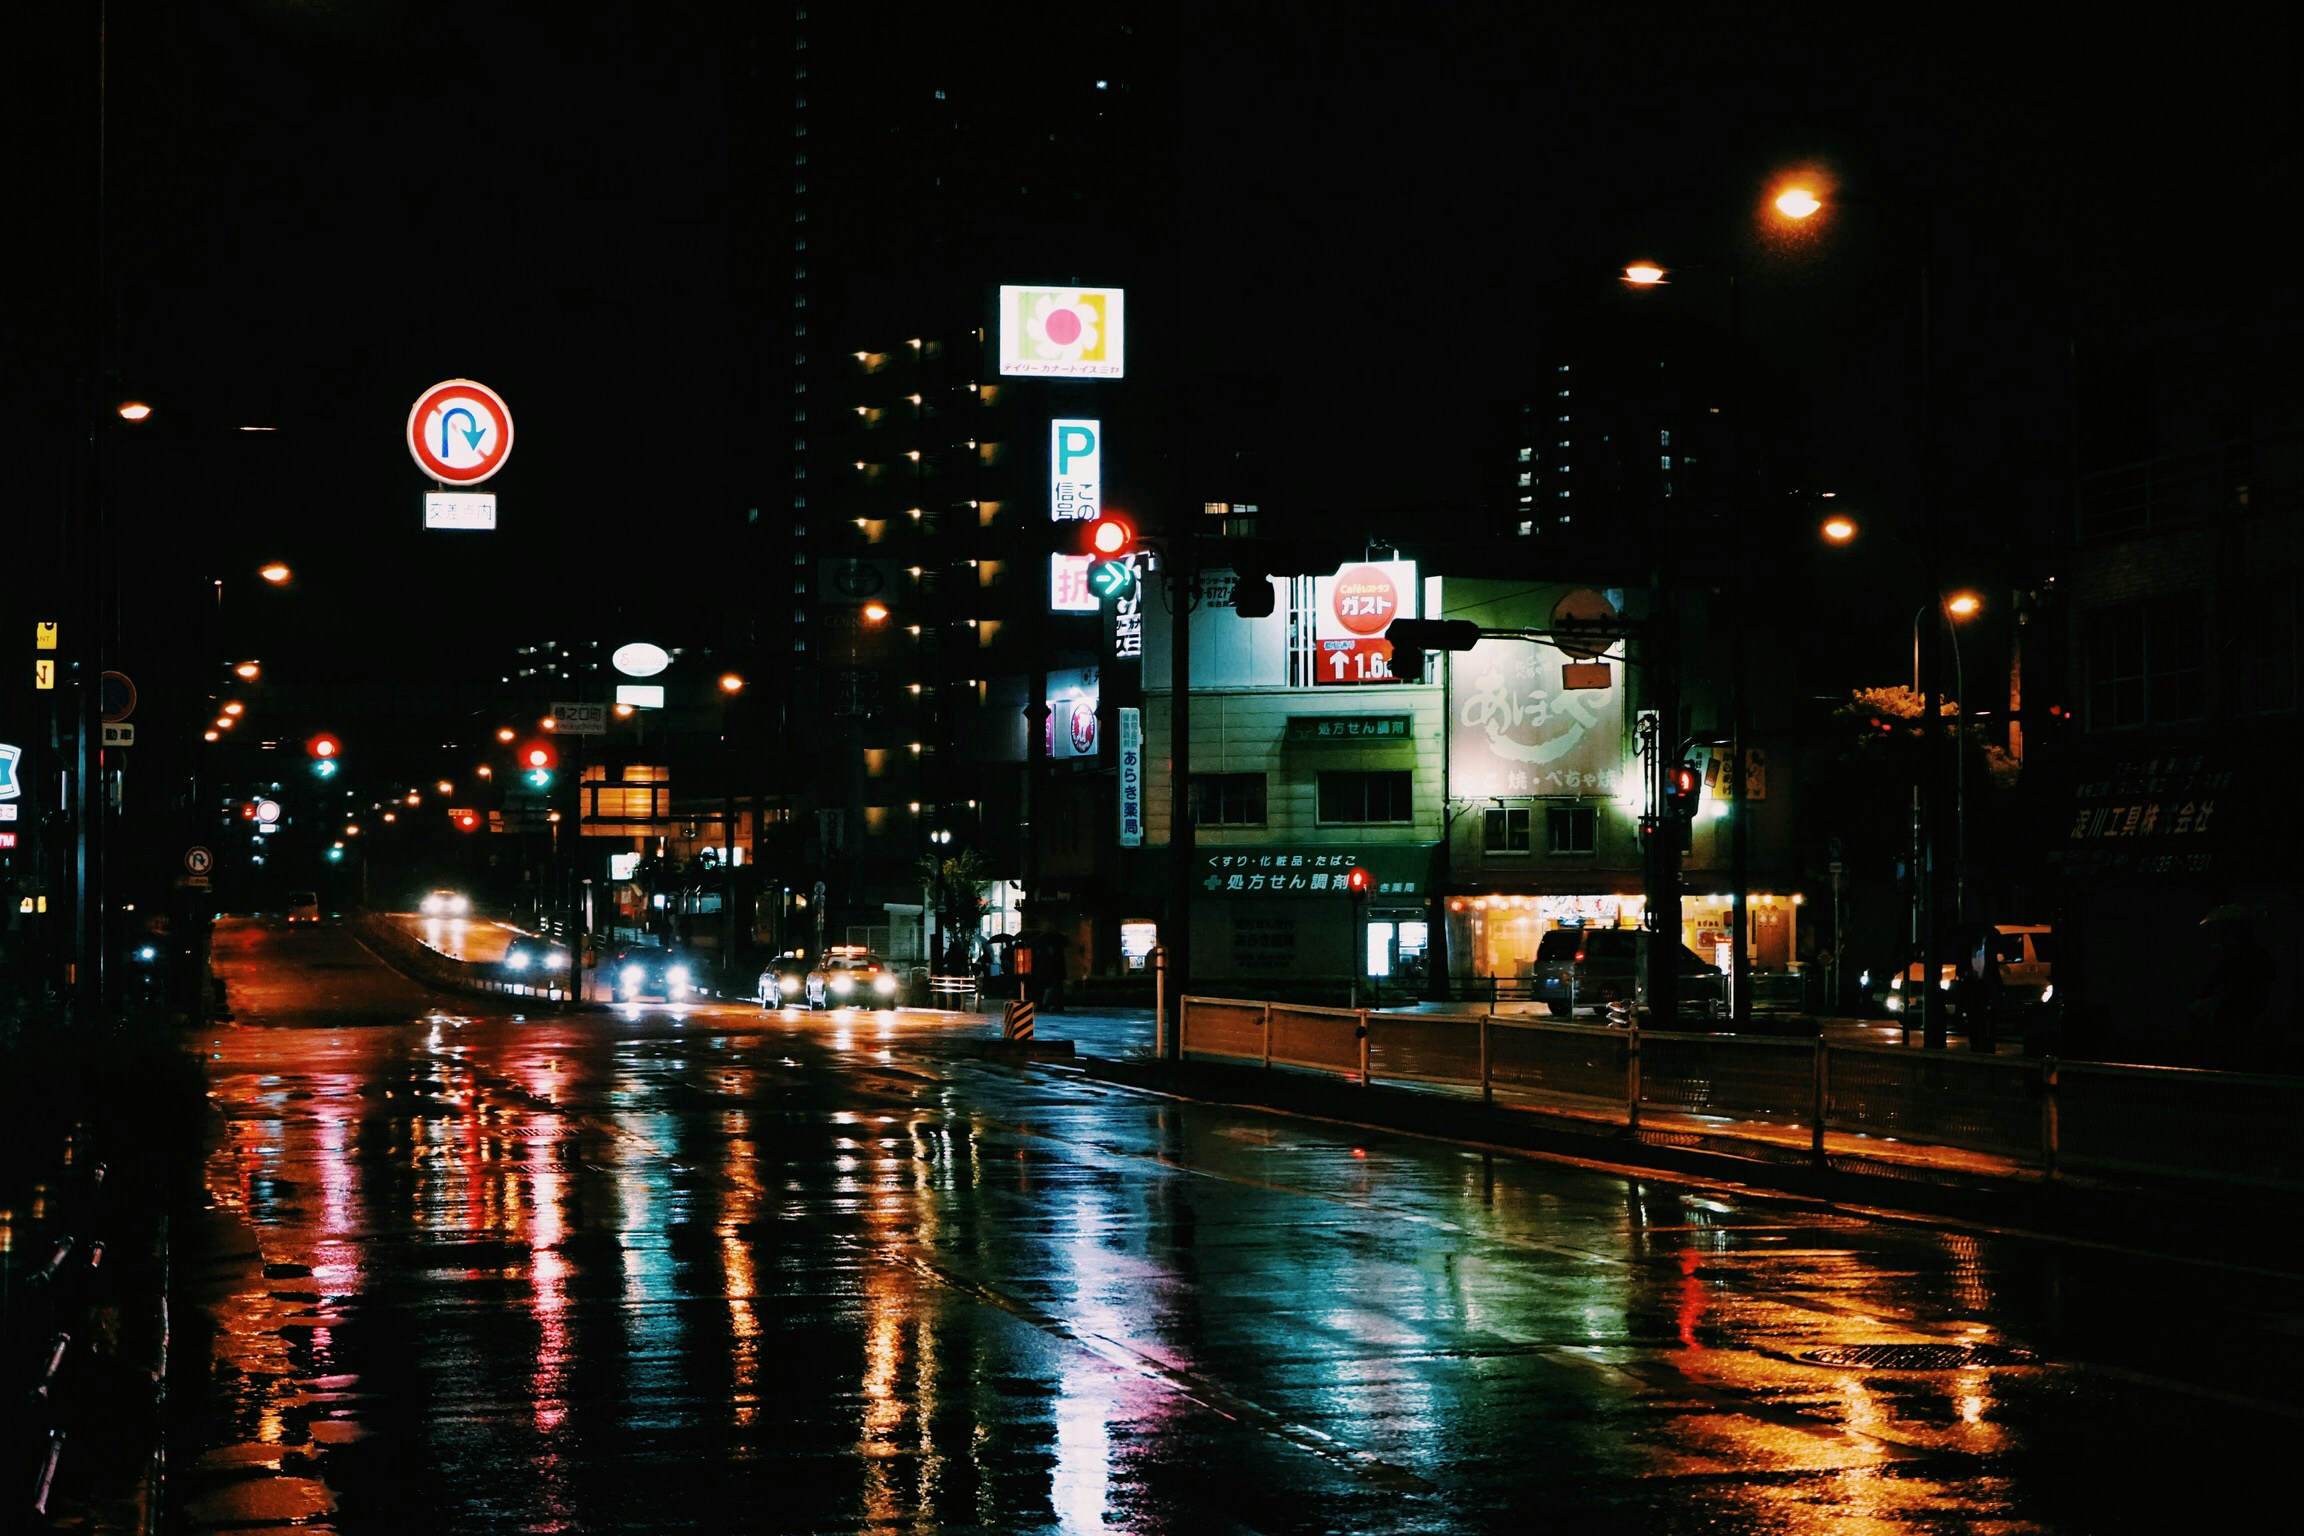 an empty wet city street is seen at night